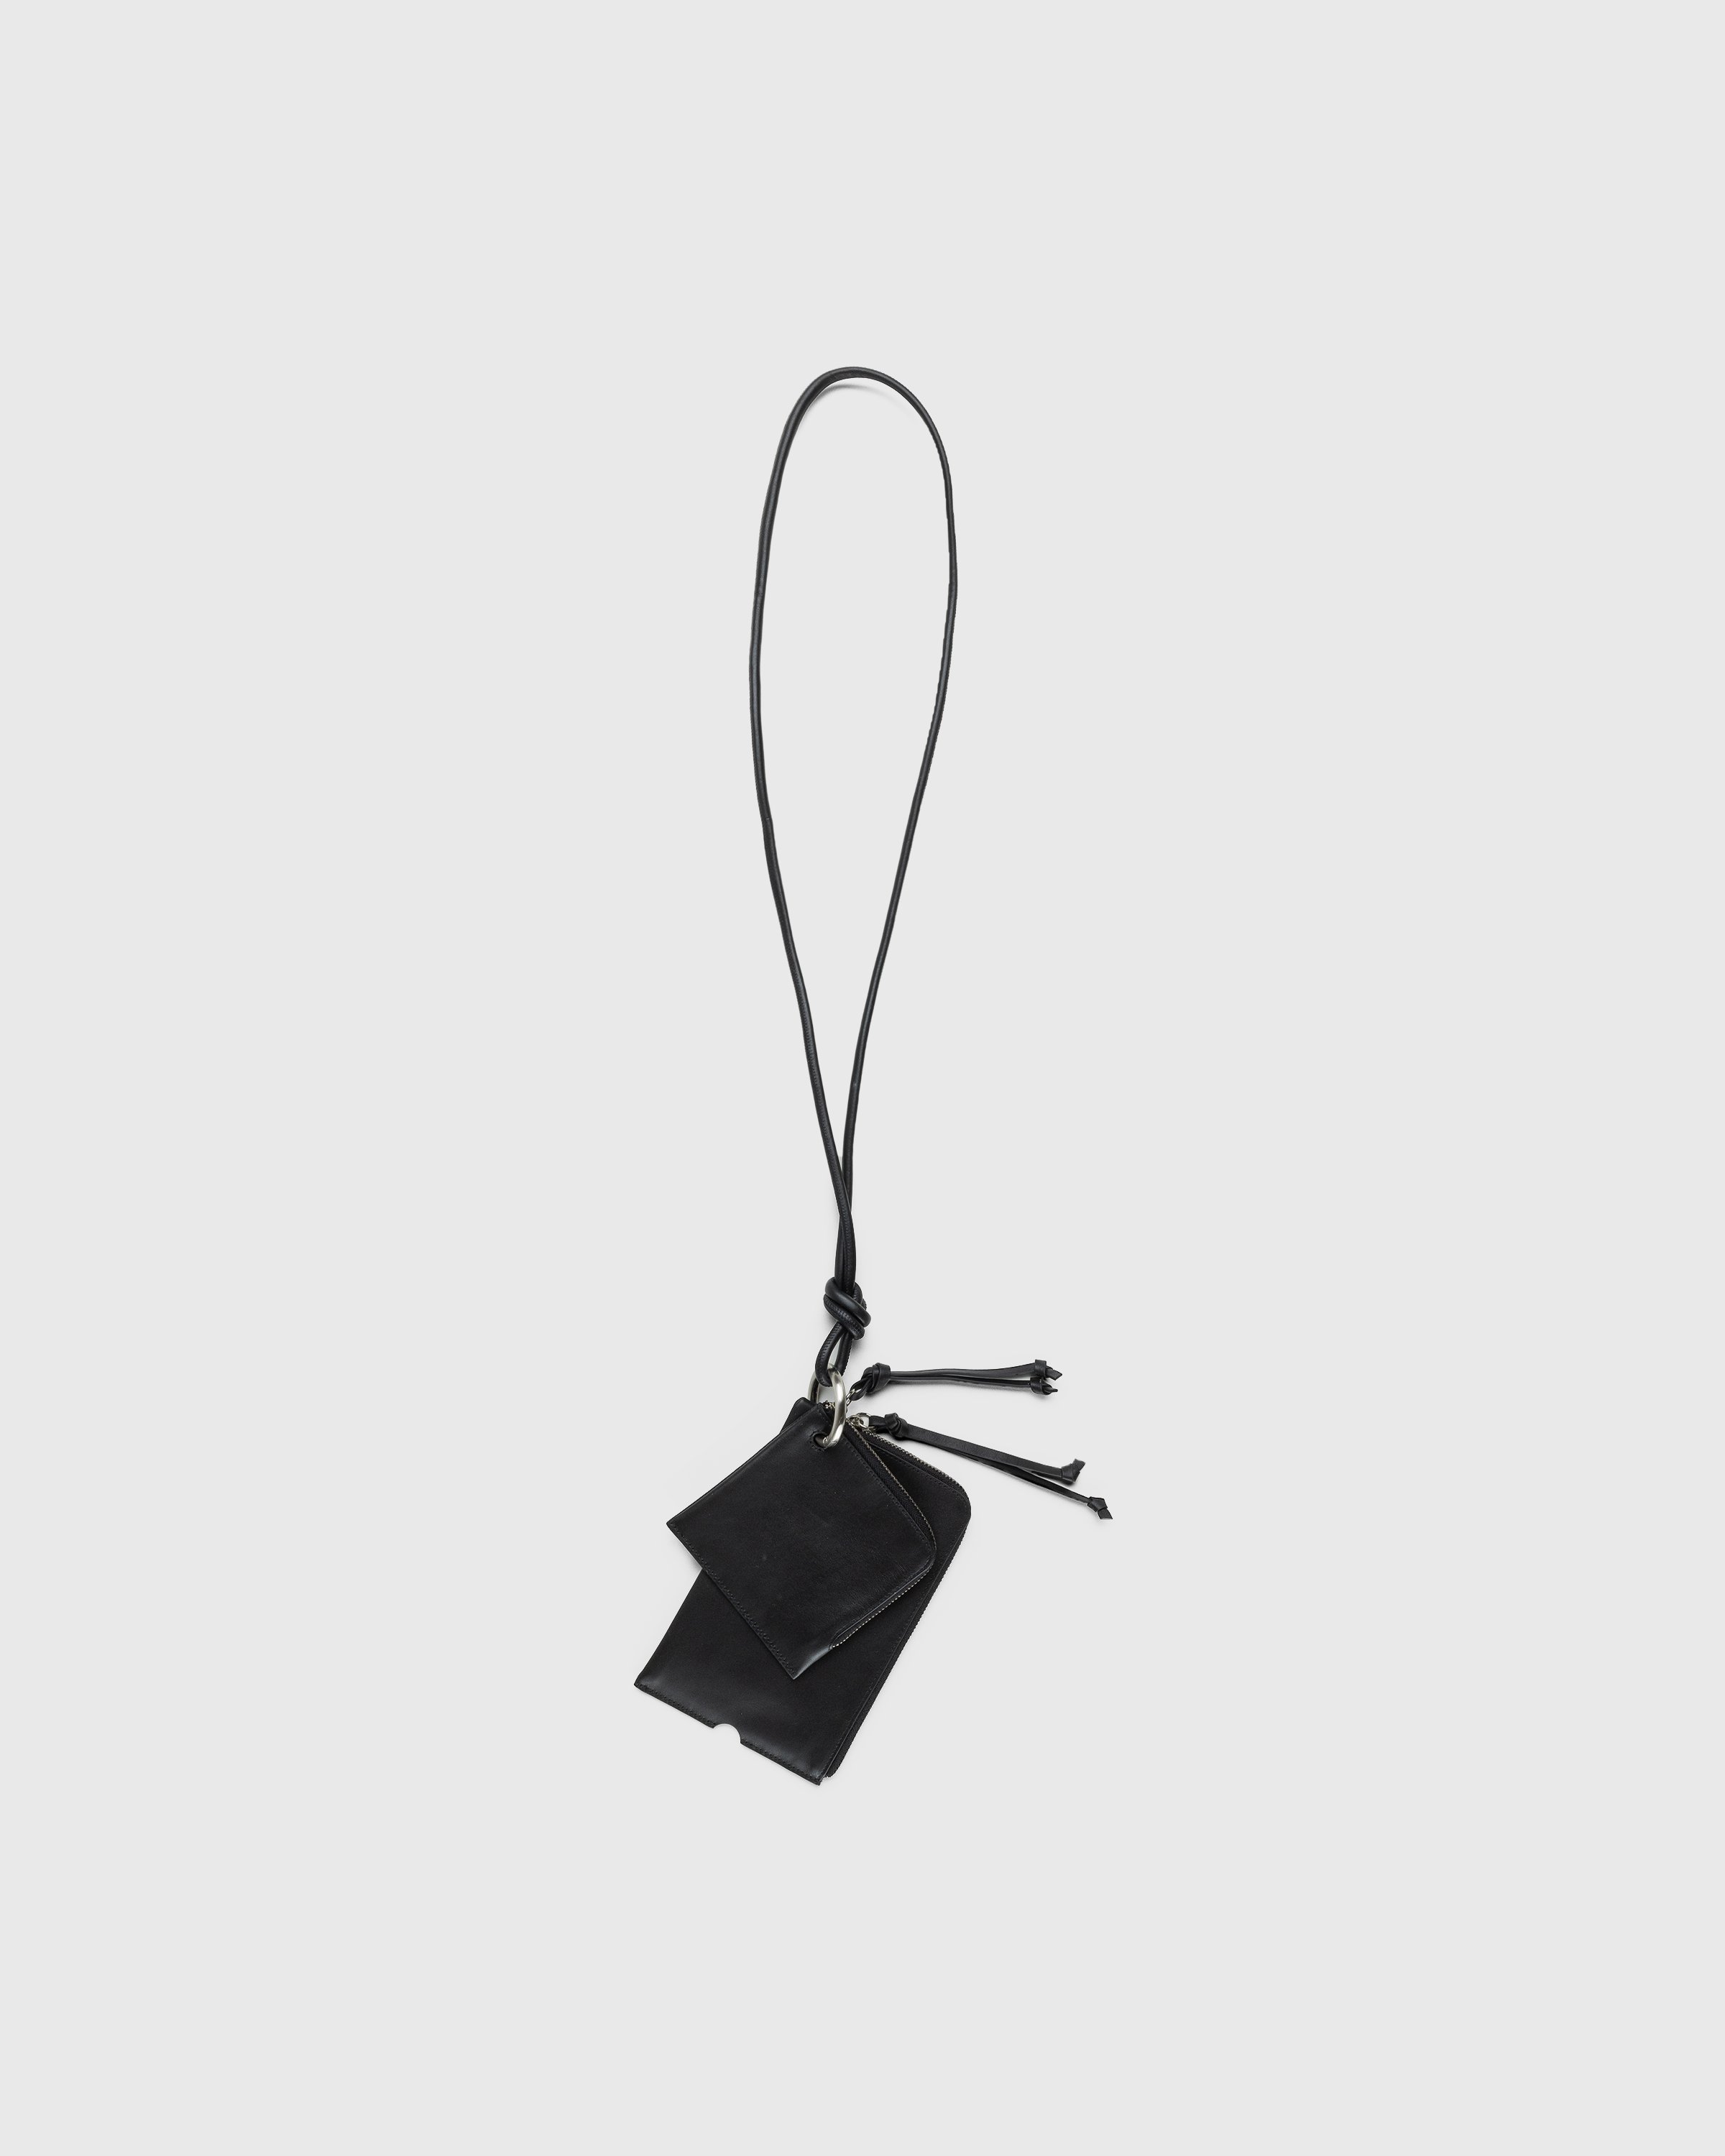 Dries van Noten - Double Cardholder Black - Accessories - Black - Image 1